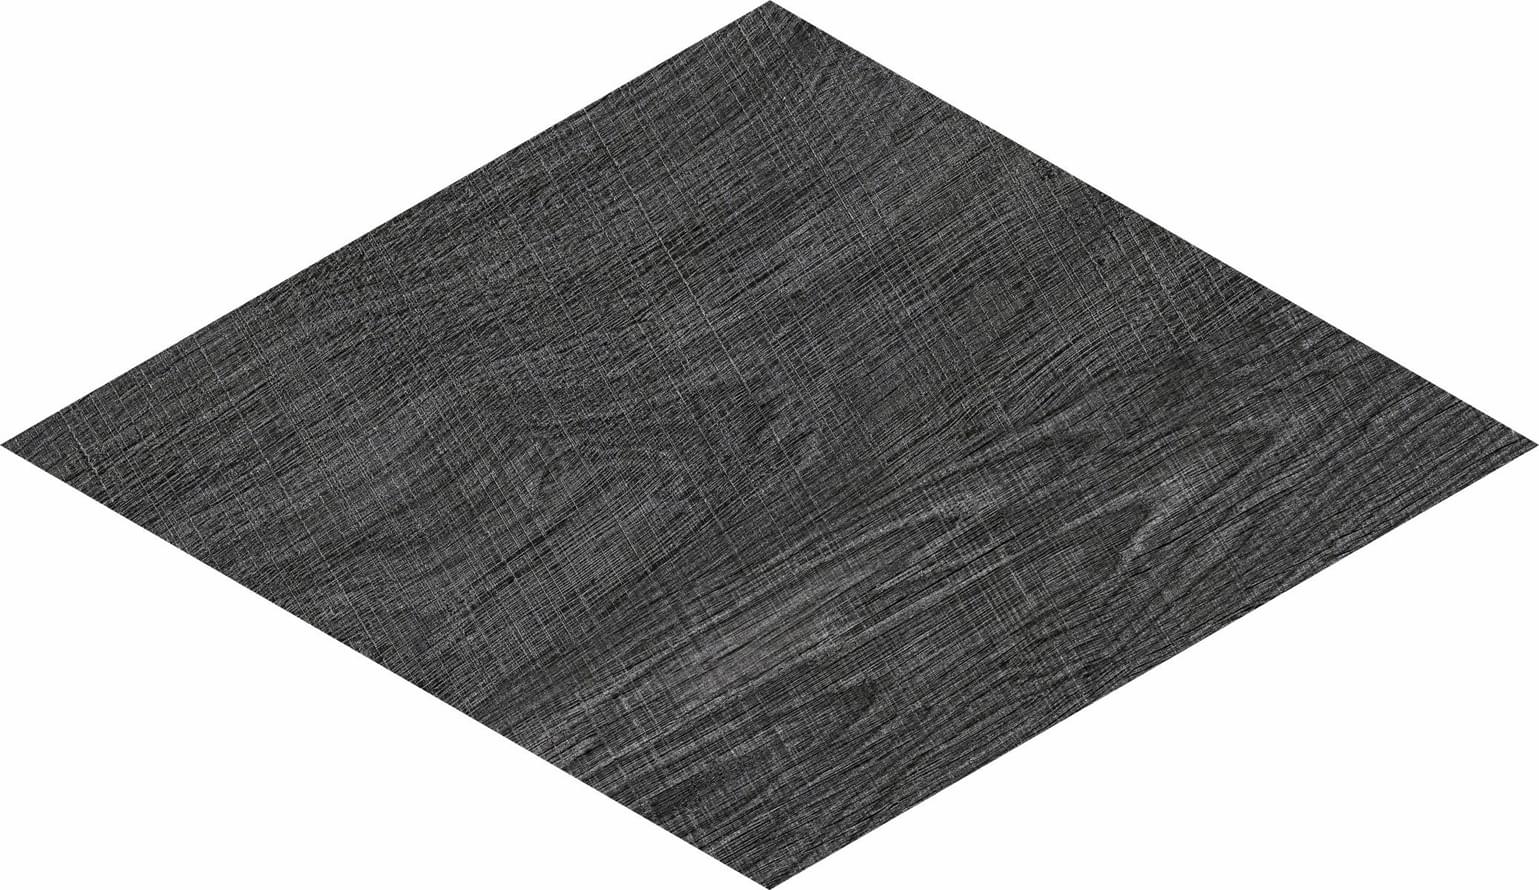 ABK Crossroad Wood Coal Rett Rombo 30 30x30